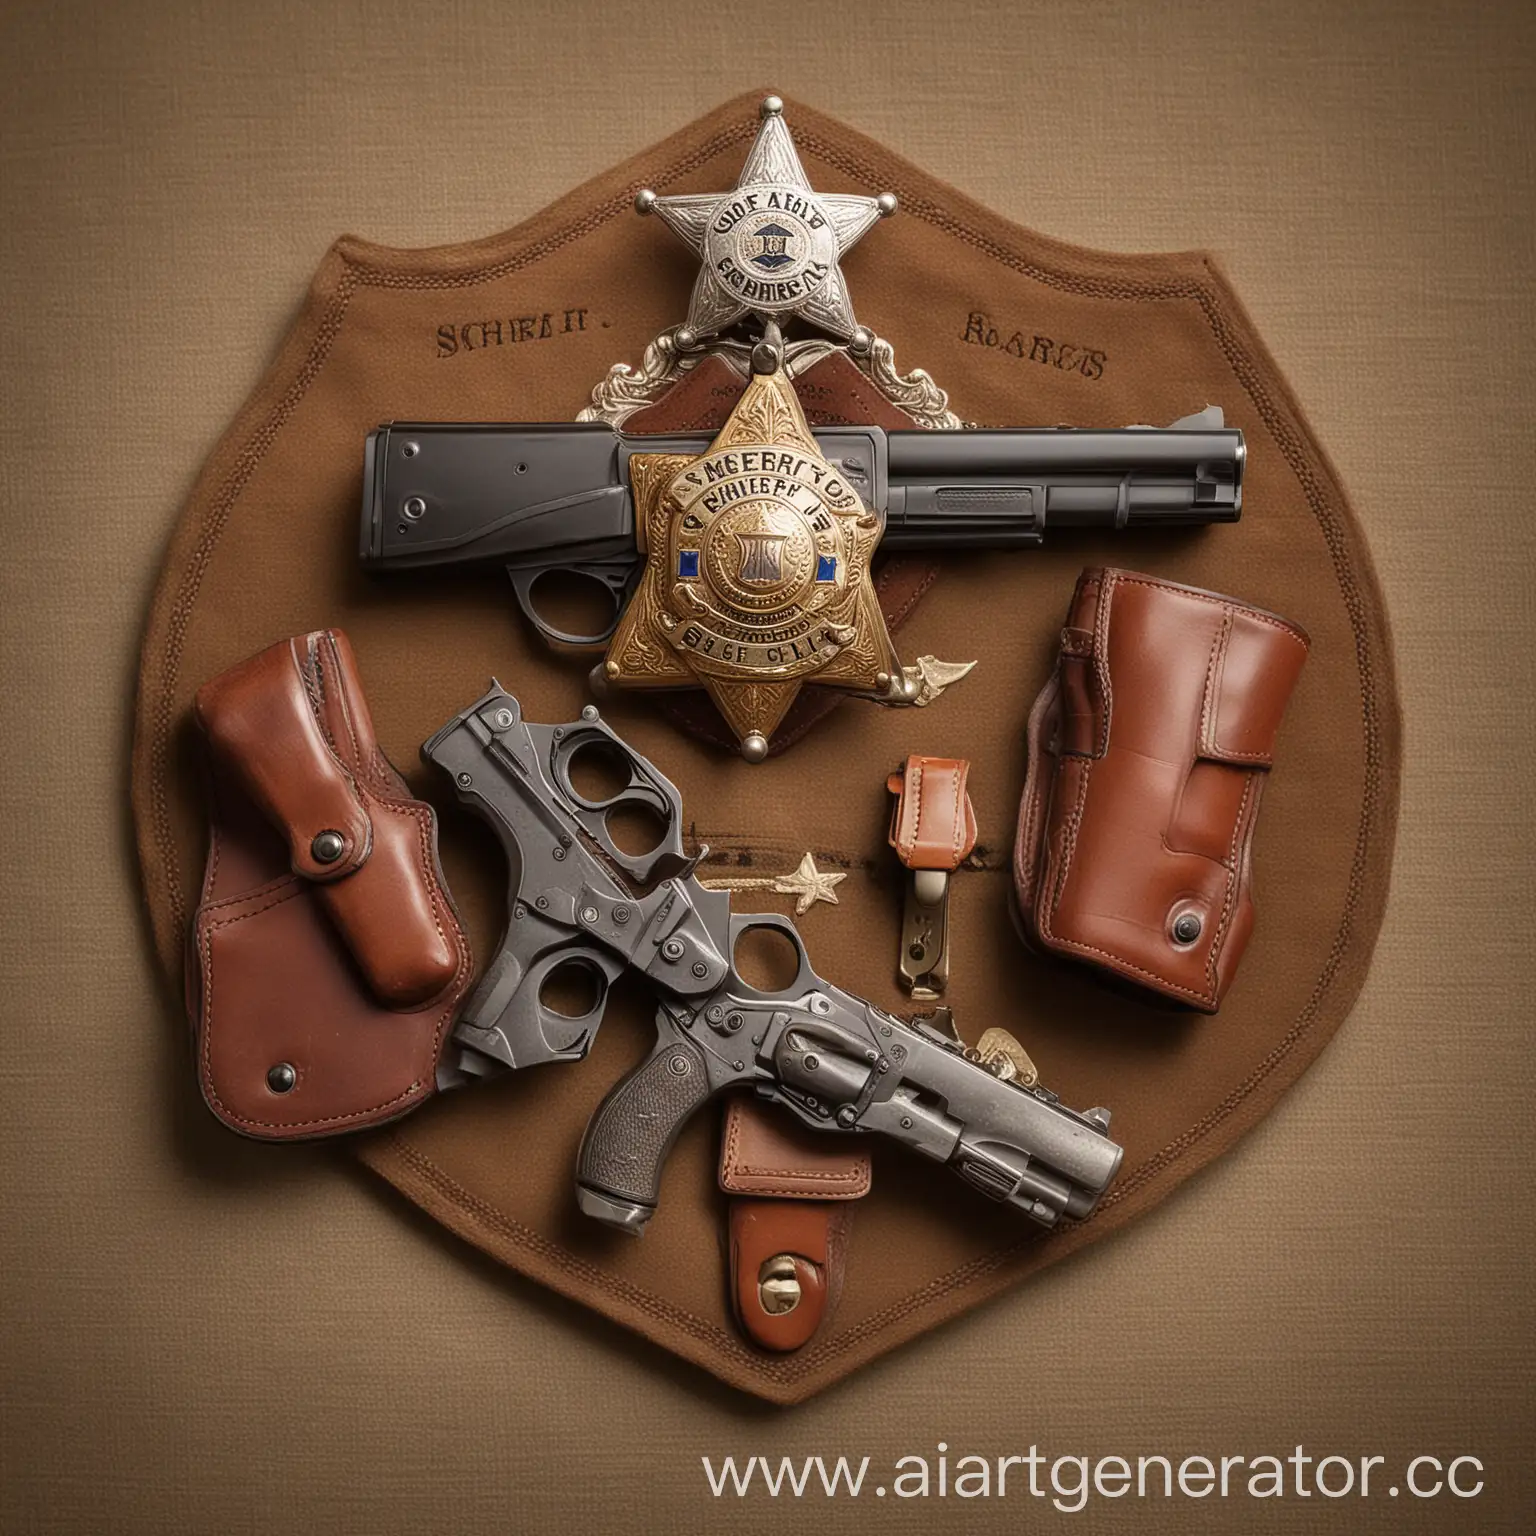 Sheriffs-Essentials-Badge-Holster-and-Top-Secret-Pistol